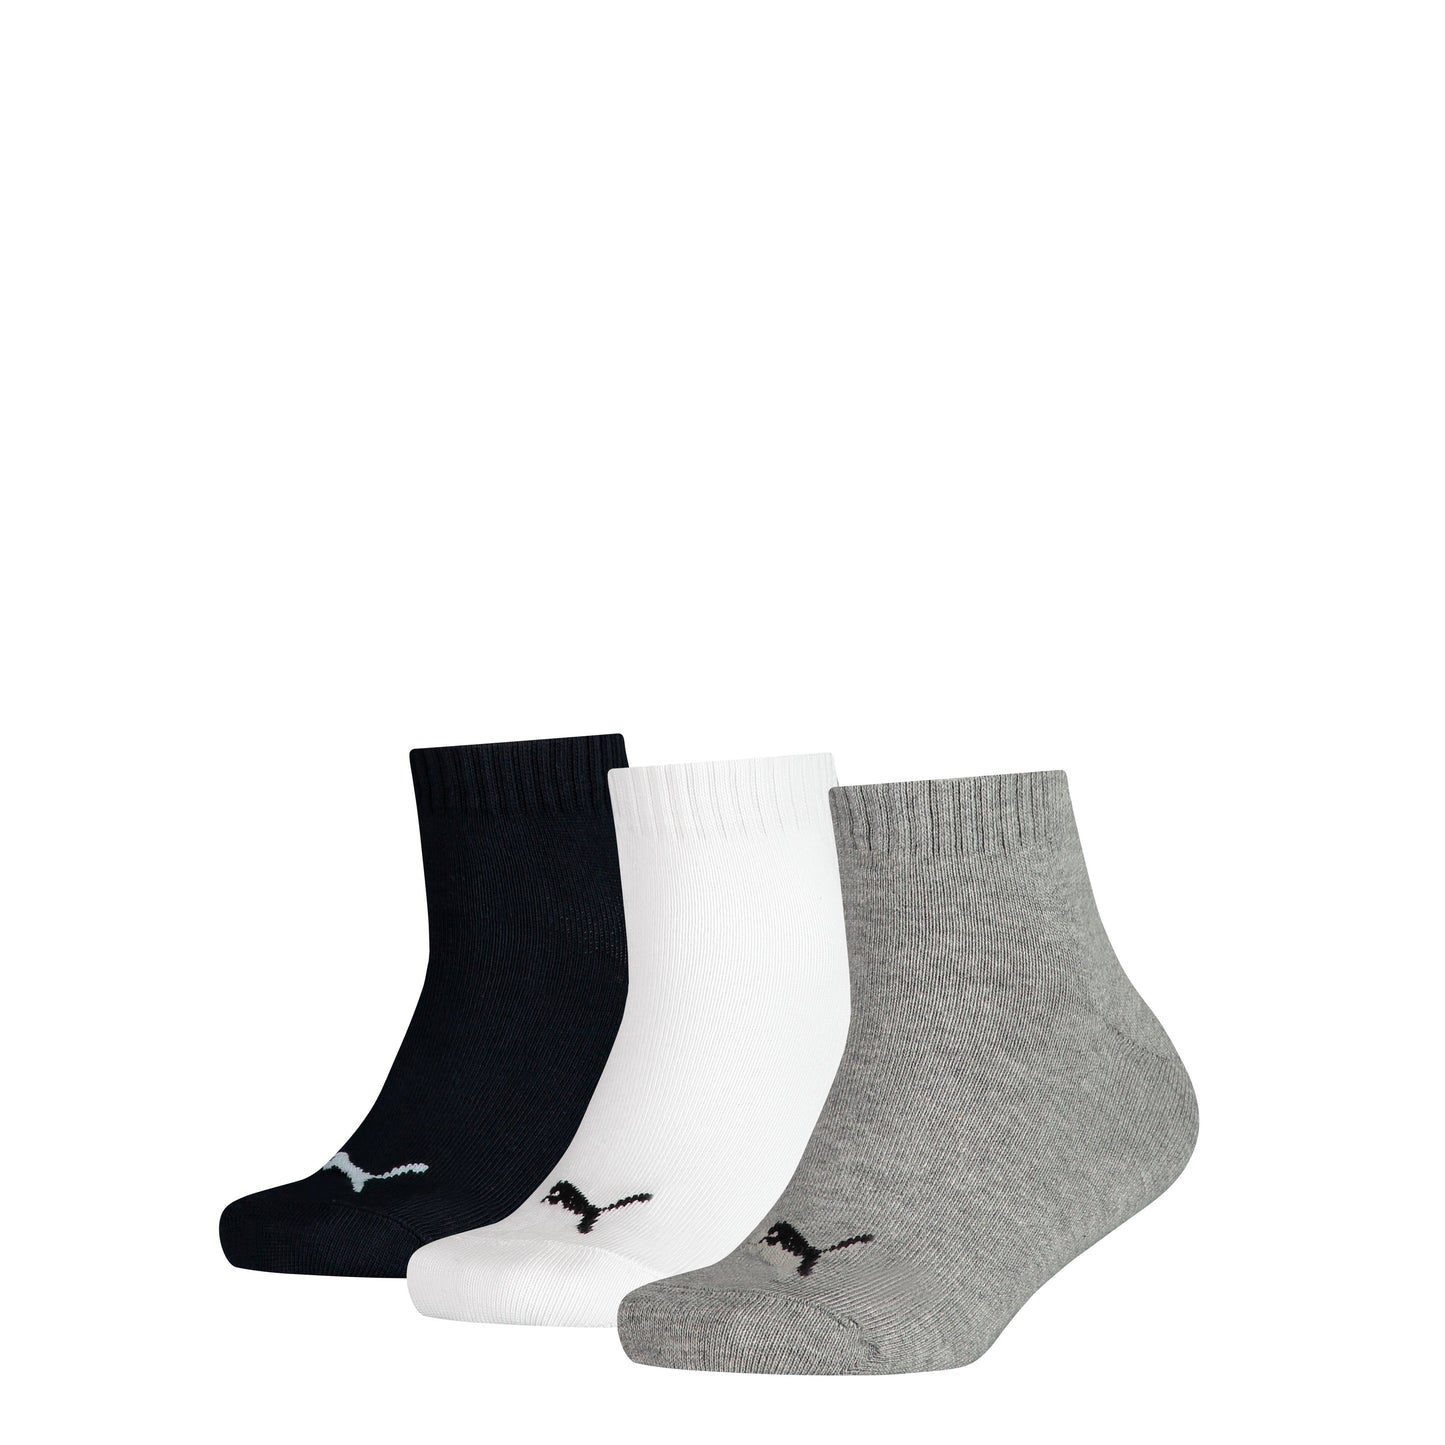 PUMA Kids Quarter Socks (3 pairs for $15)  (6 pairs for $23)